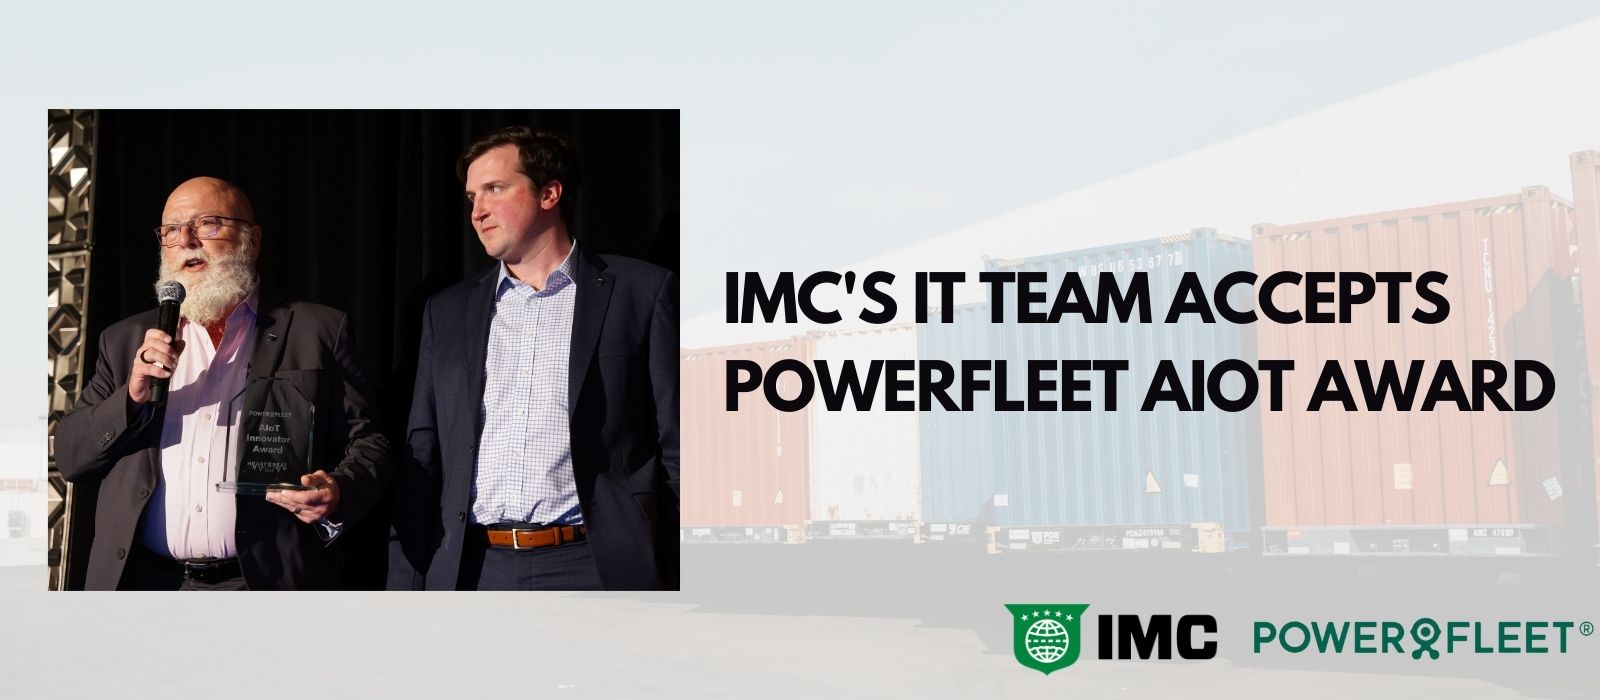 IMC’s IT Team Accepts Powerfleet AIoT Award